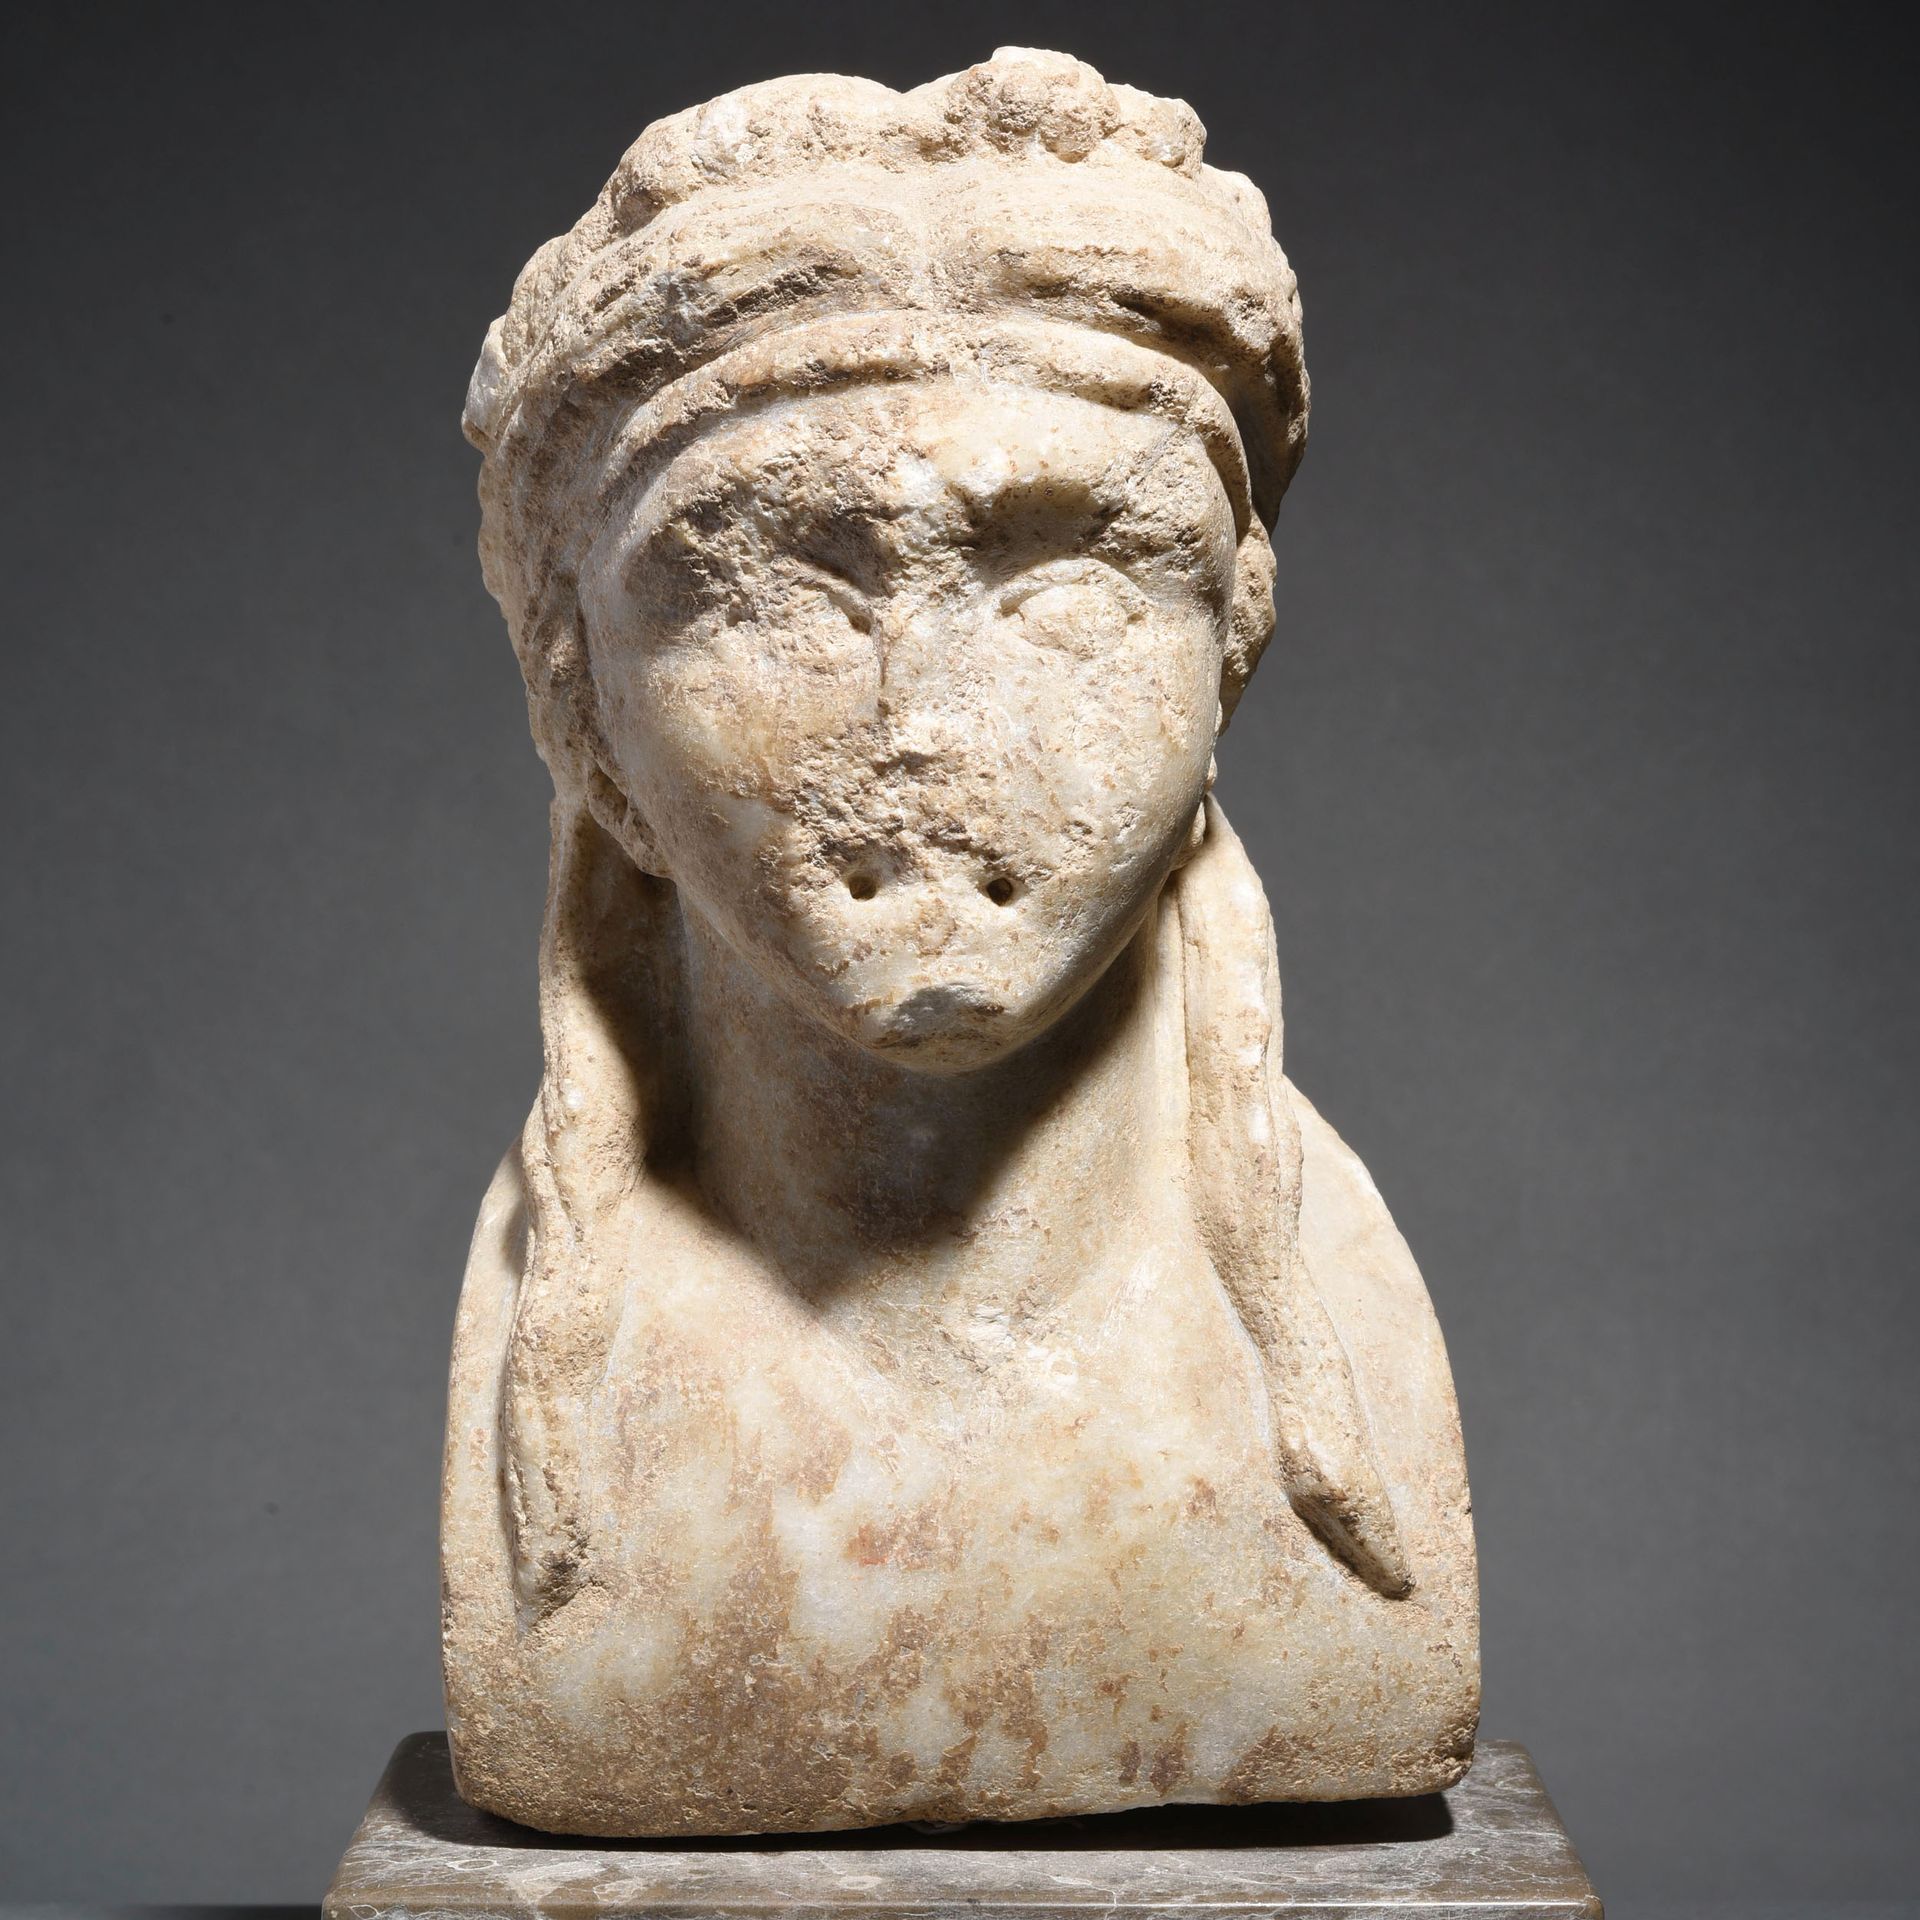 Null DIONYSIAN HERM

Arte romano, siglo I - I d.C.

Mármol, quemado. El rostro s&hellip;